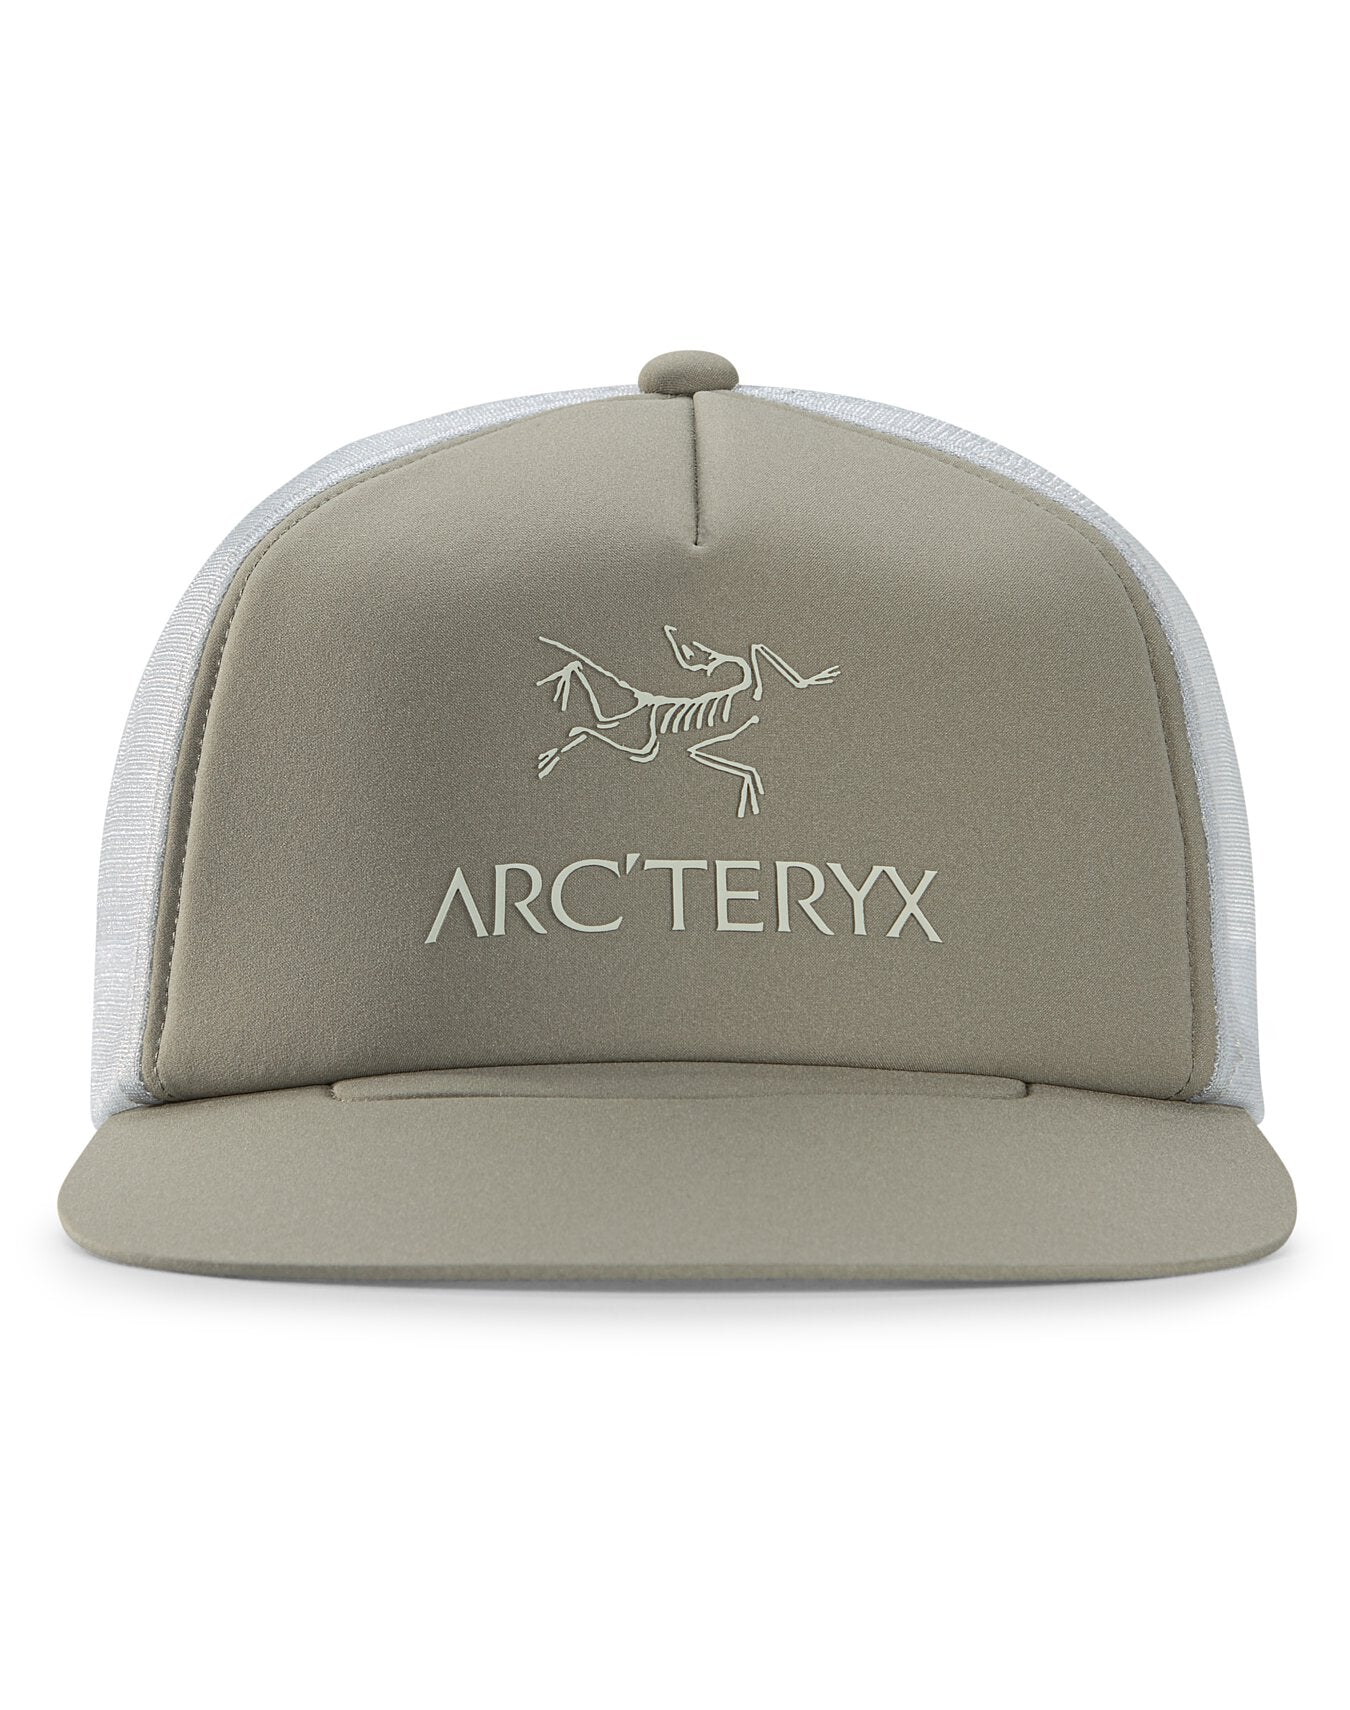 Arc'teryx - Logo Trucker Flat - Forage